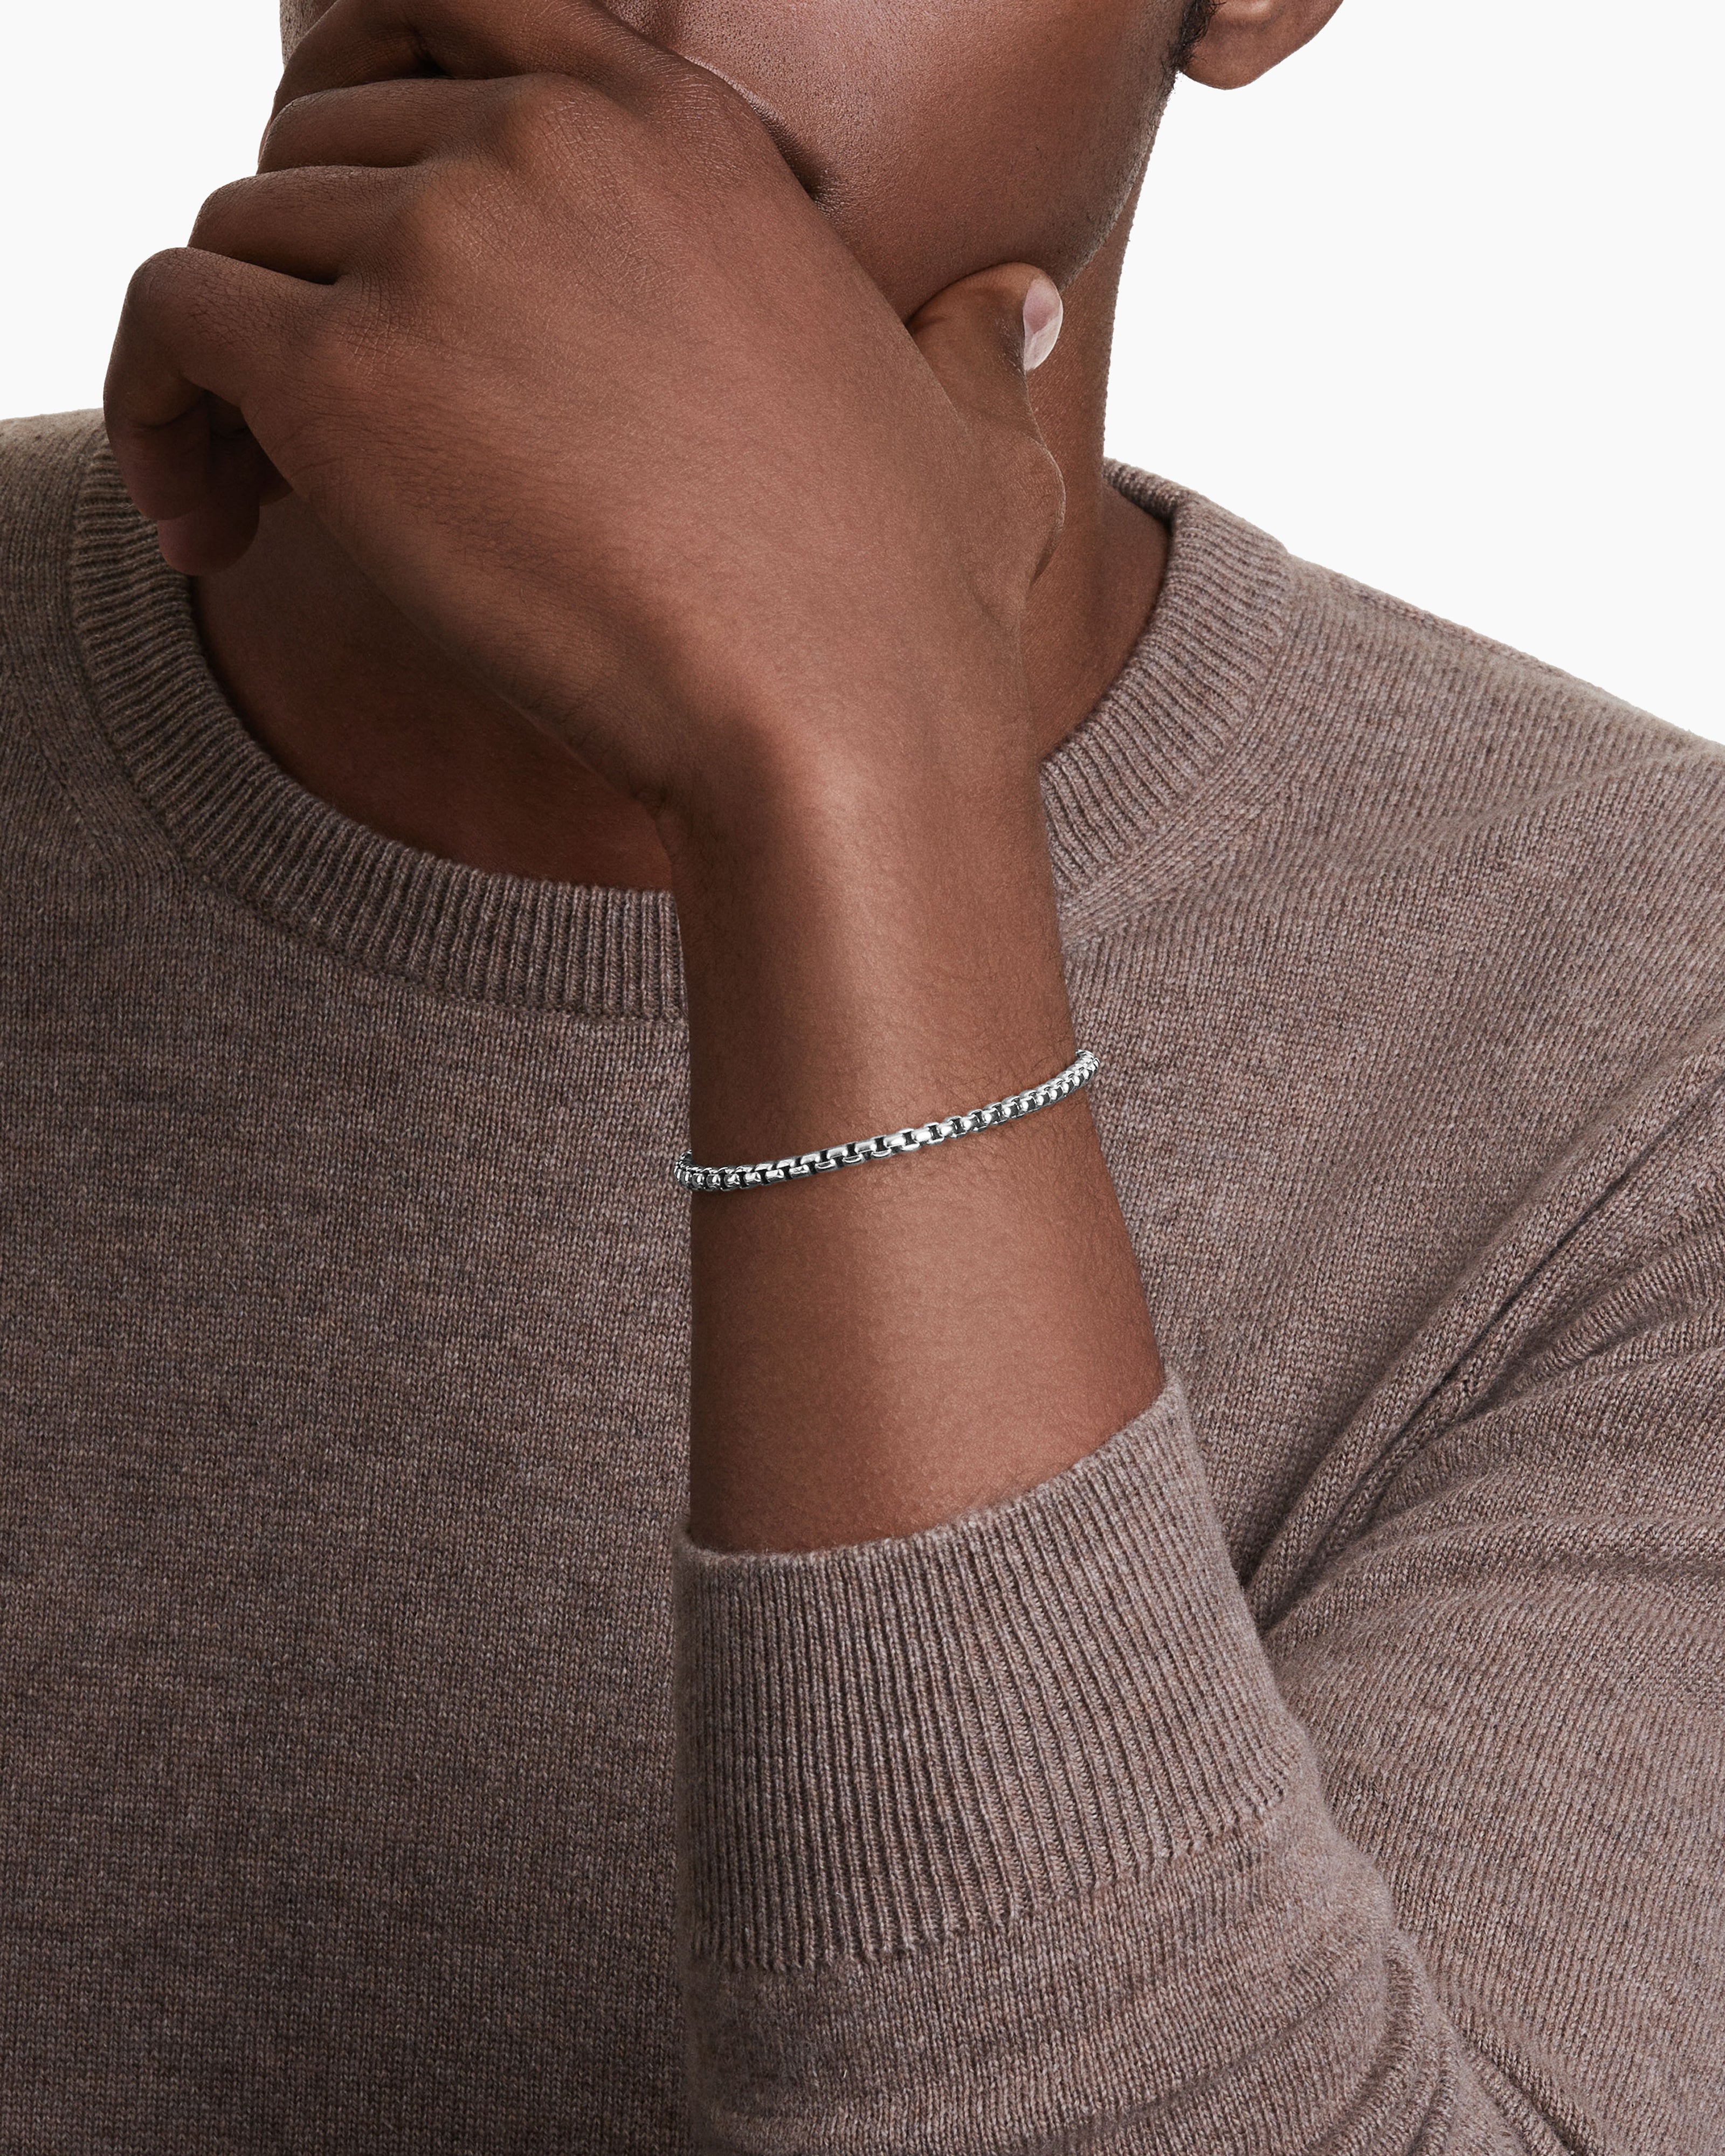 Bracelet for men made of nylon and silver